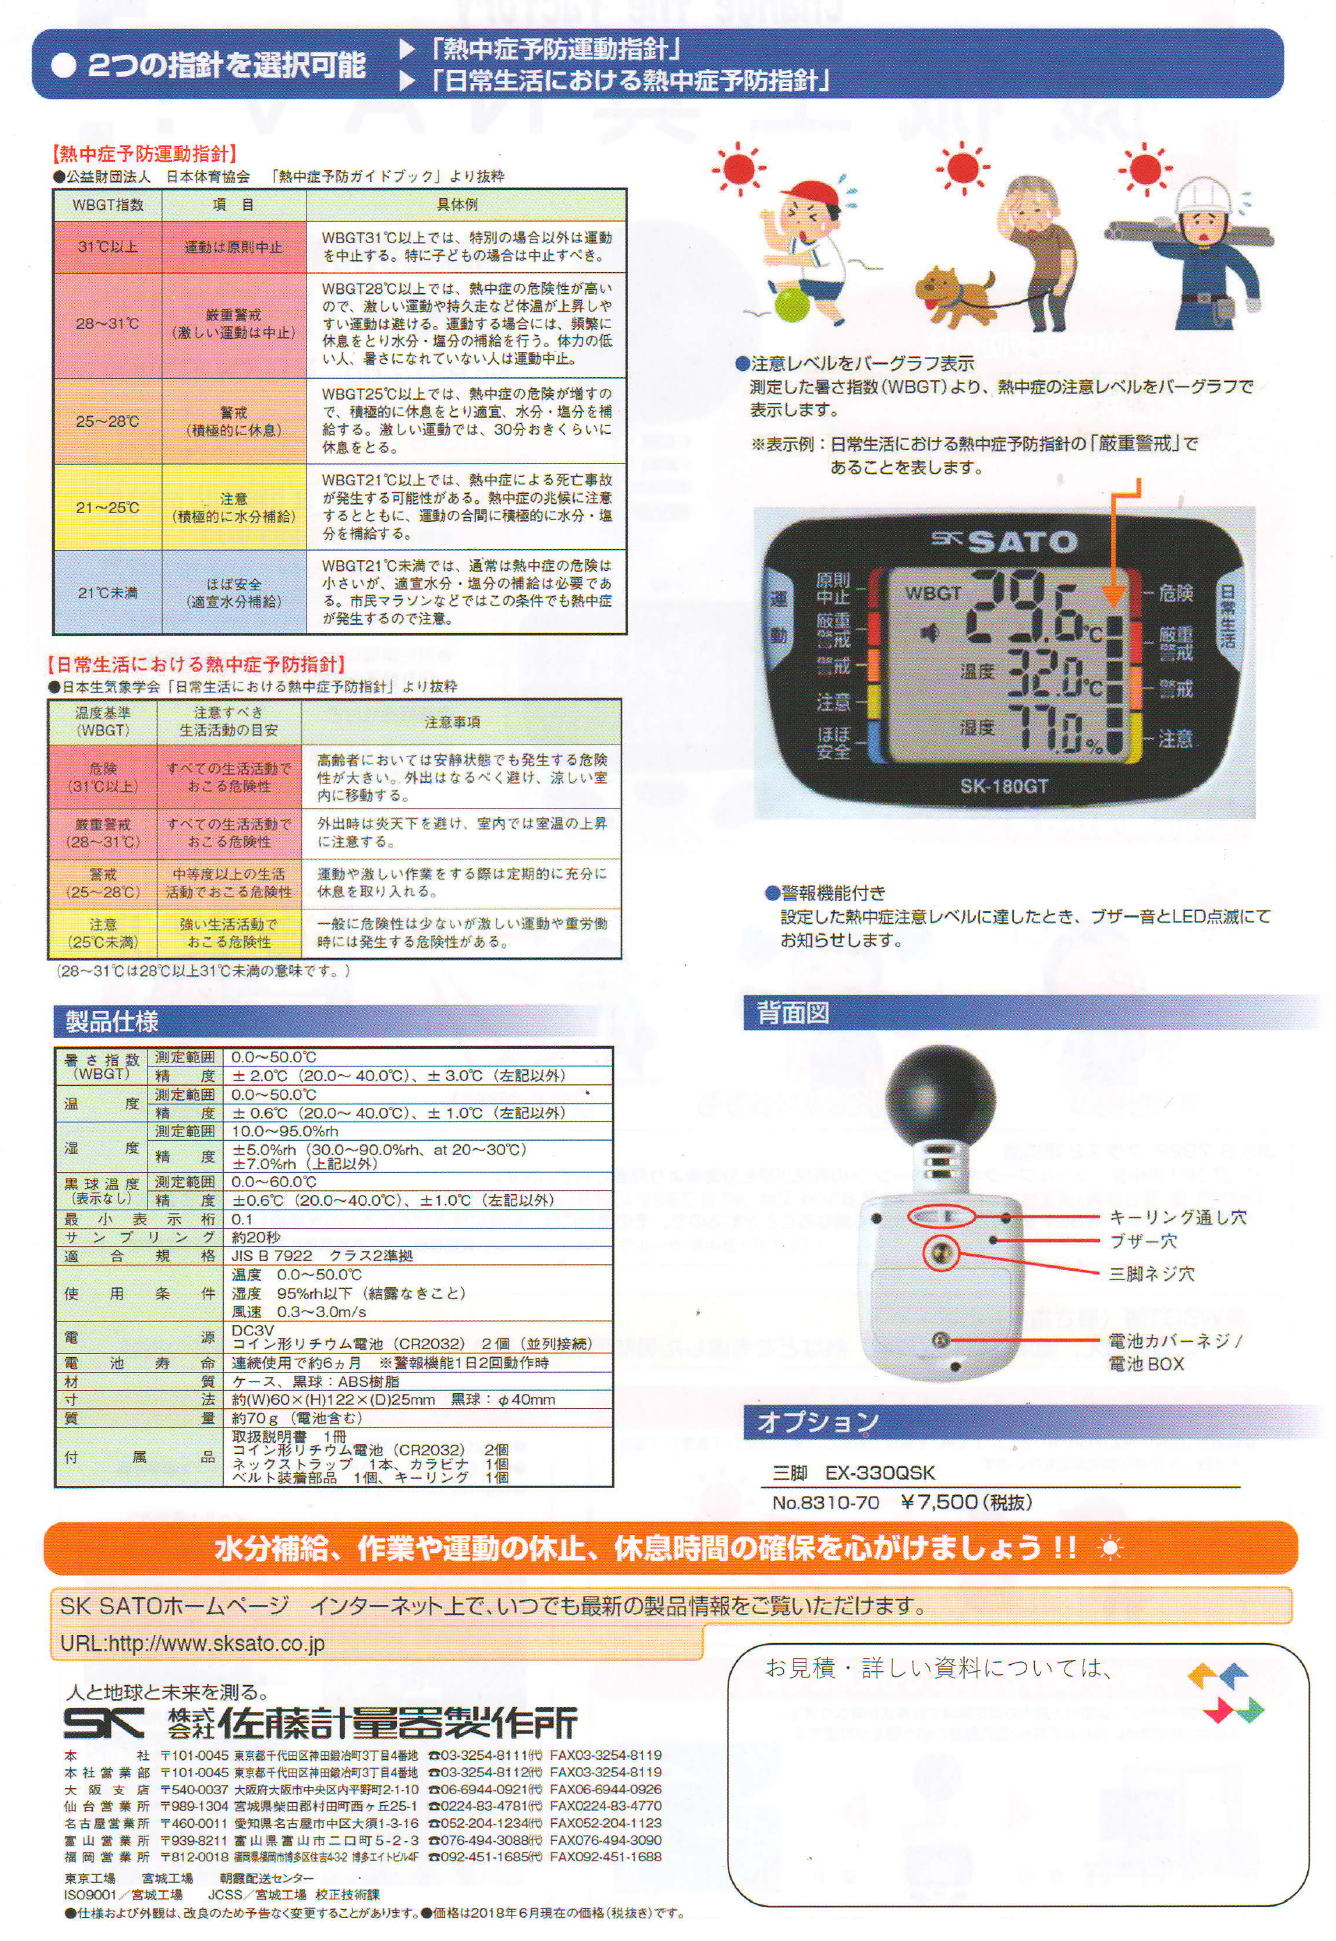 SATO　黒球型携帯熱中症計　SK-180GT 　JIS B 7922クラス２準拠